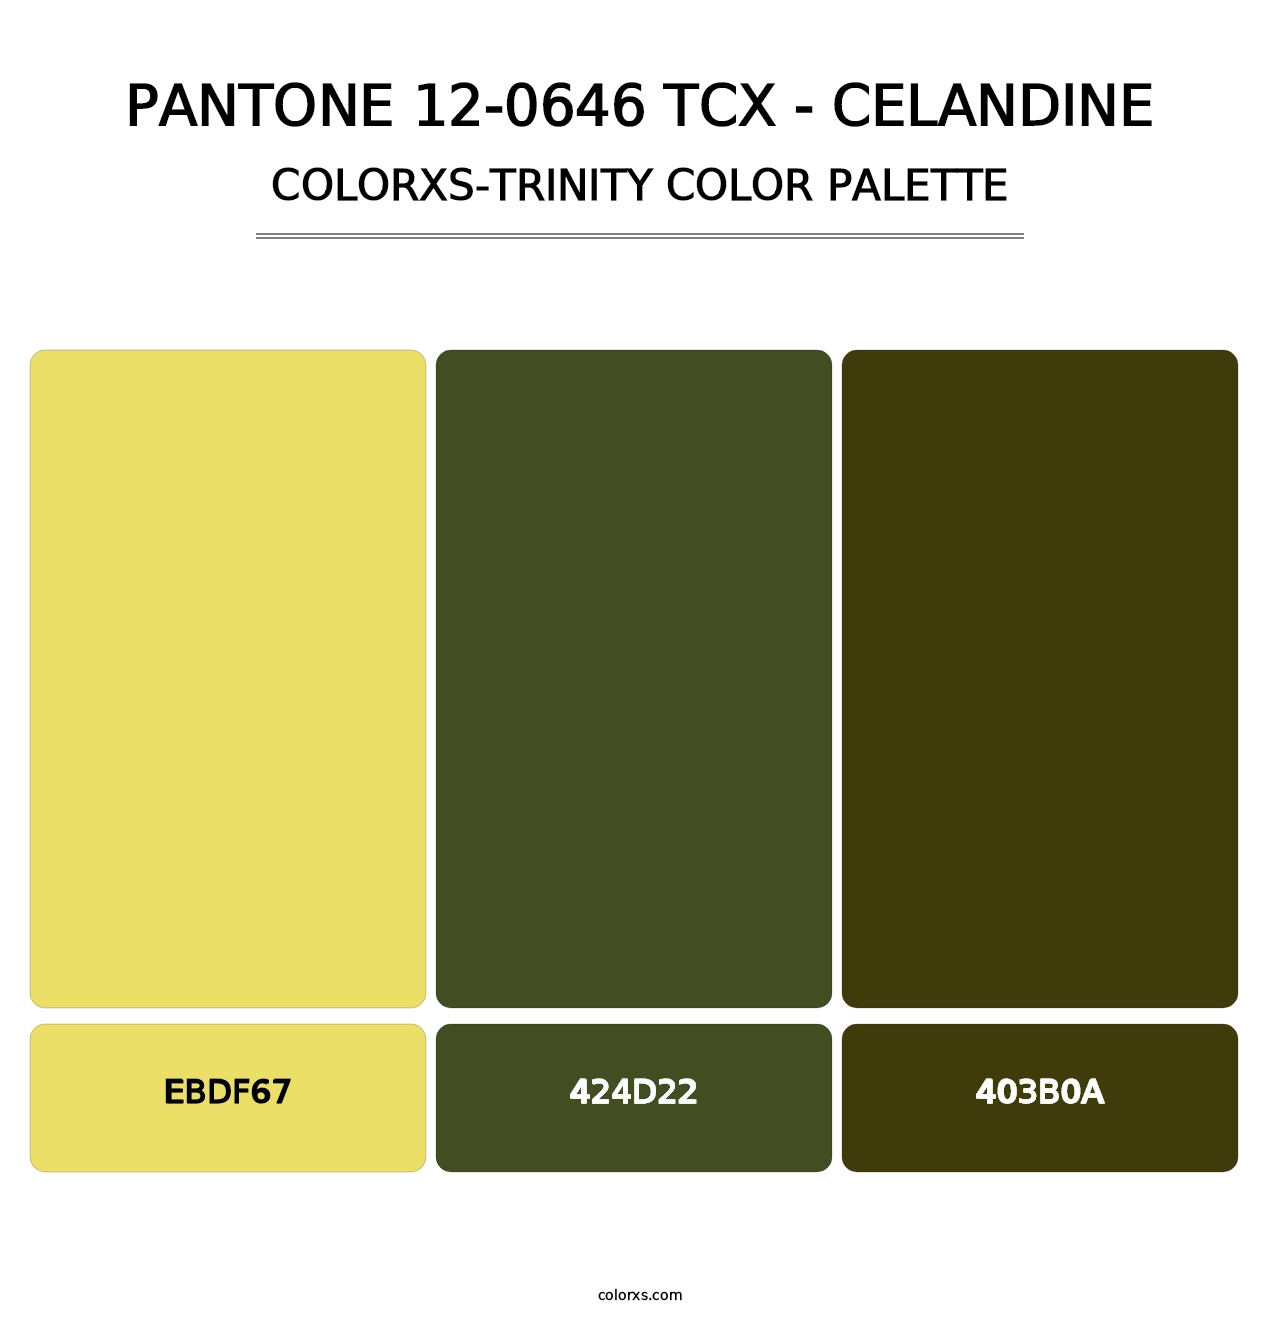 PANTONE 12-0646 TCX - Celandine - Colorxs Trinity Palette